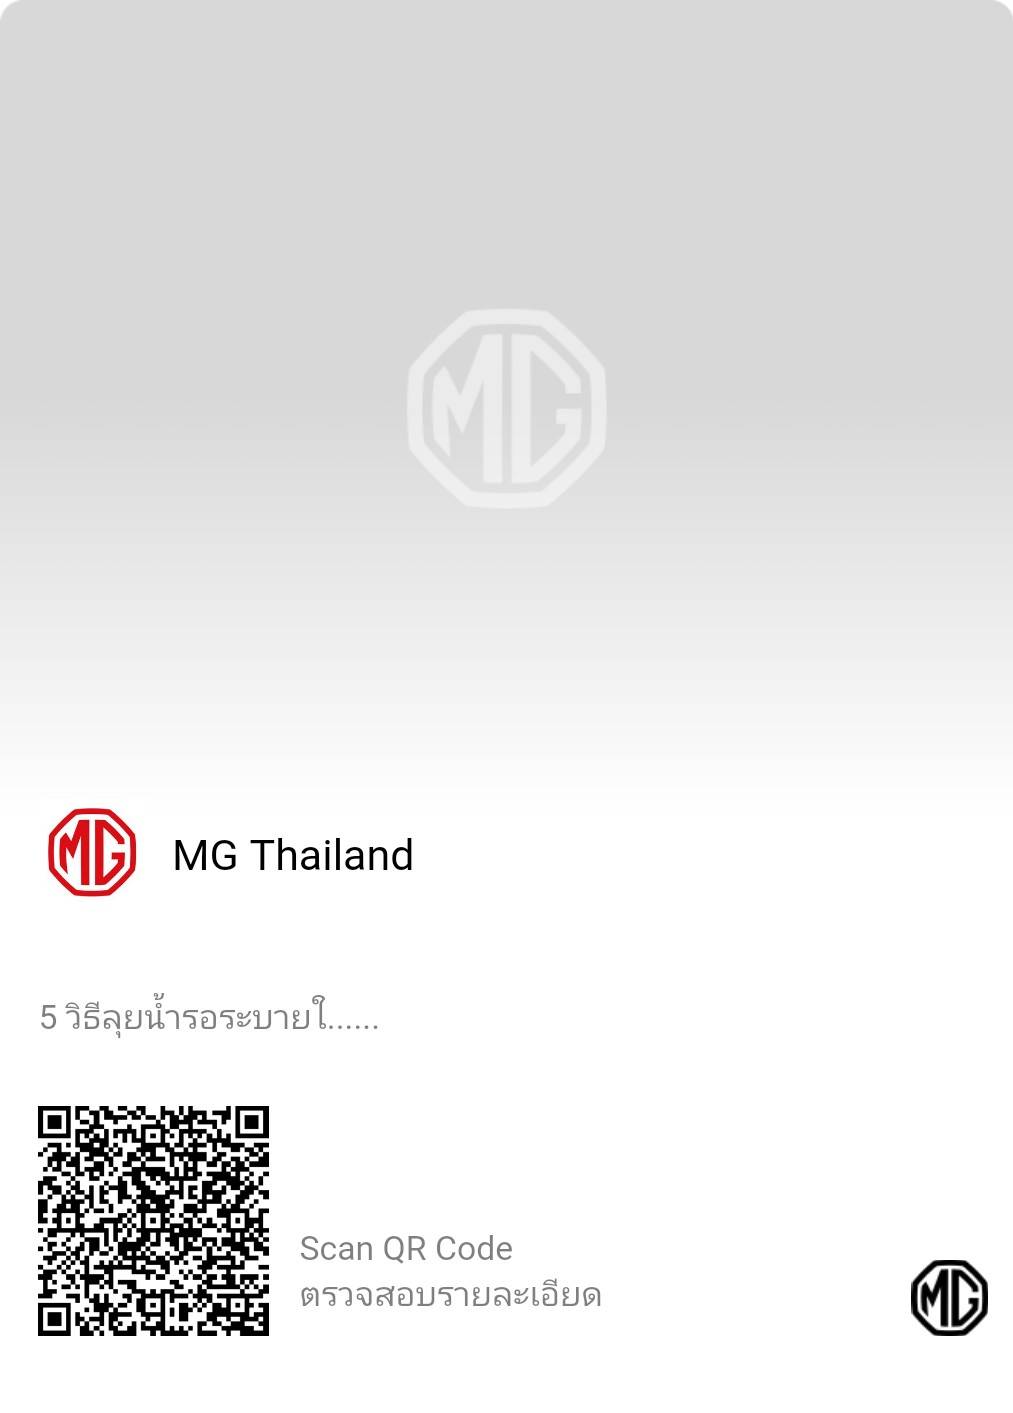 MG Thailand Application